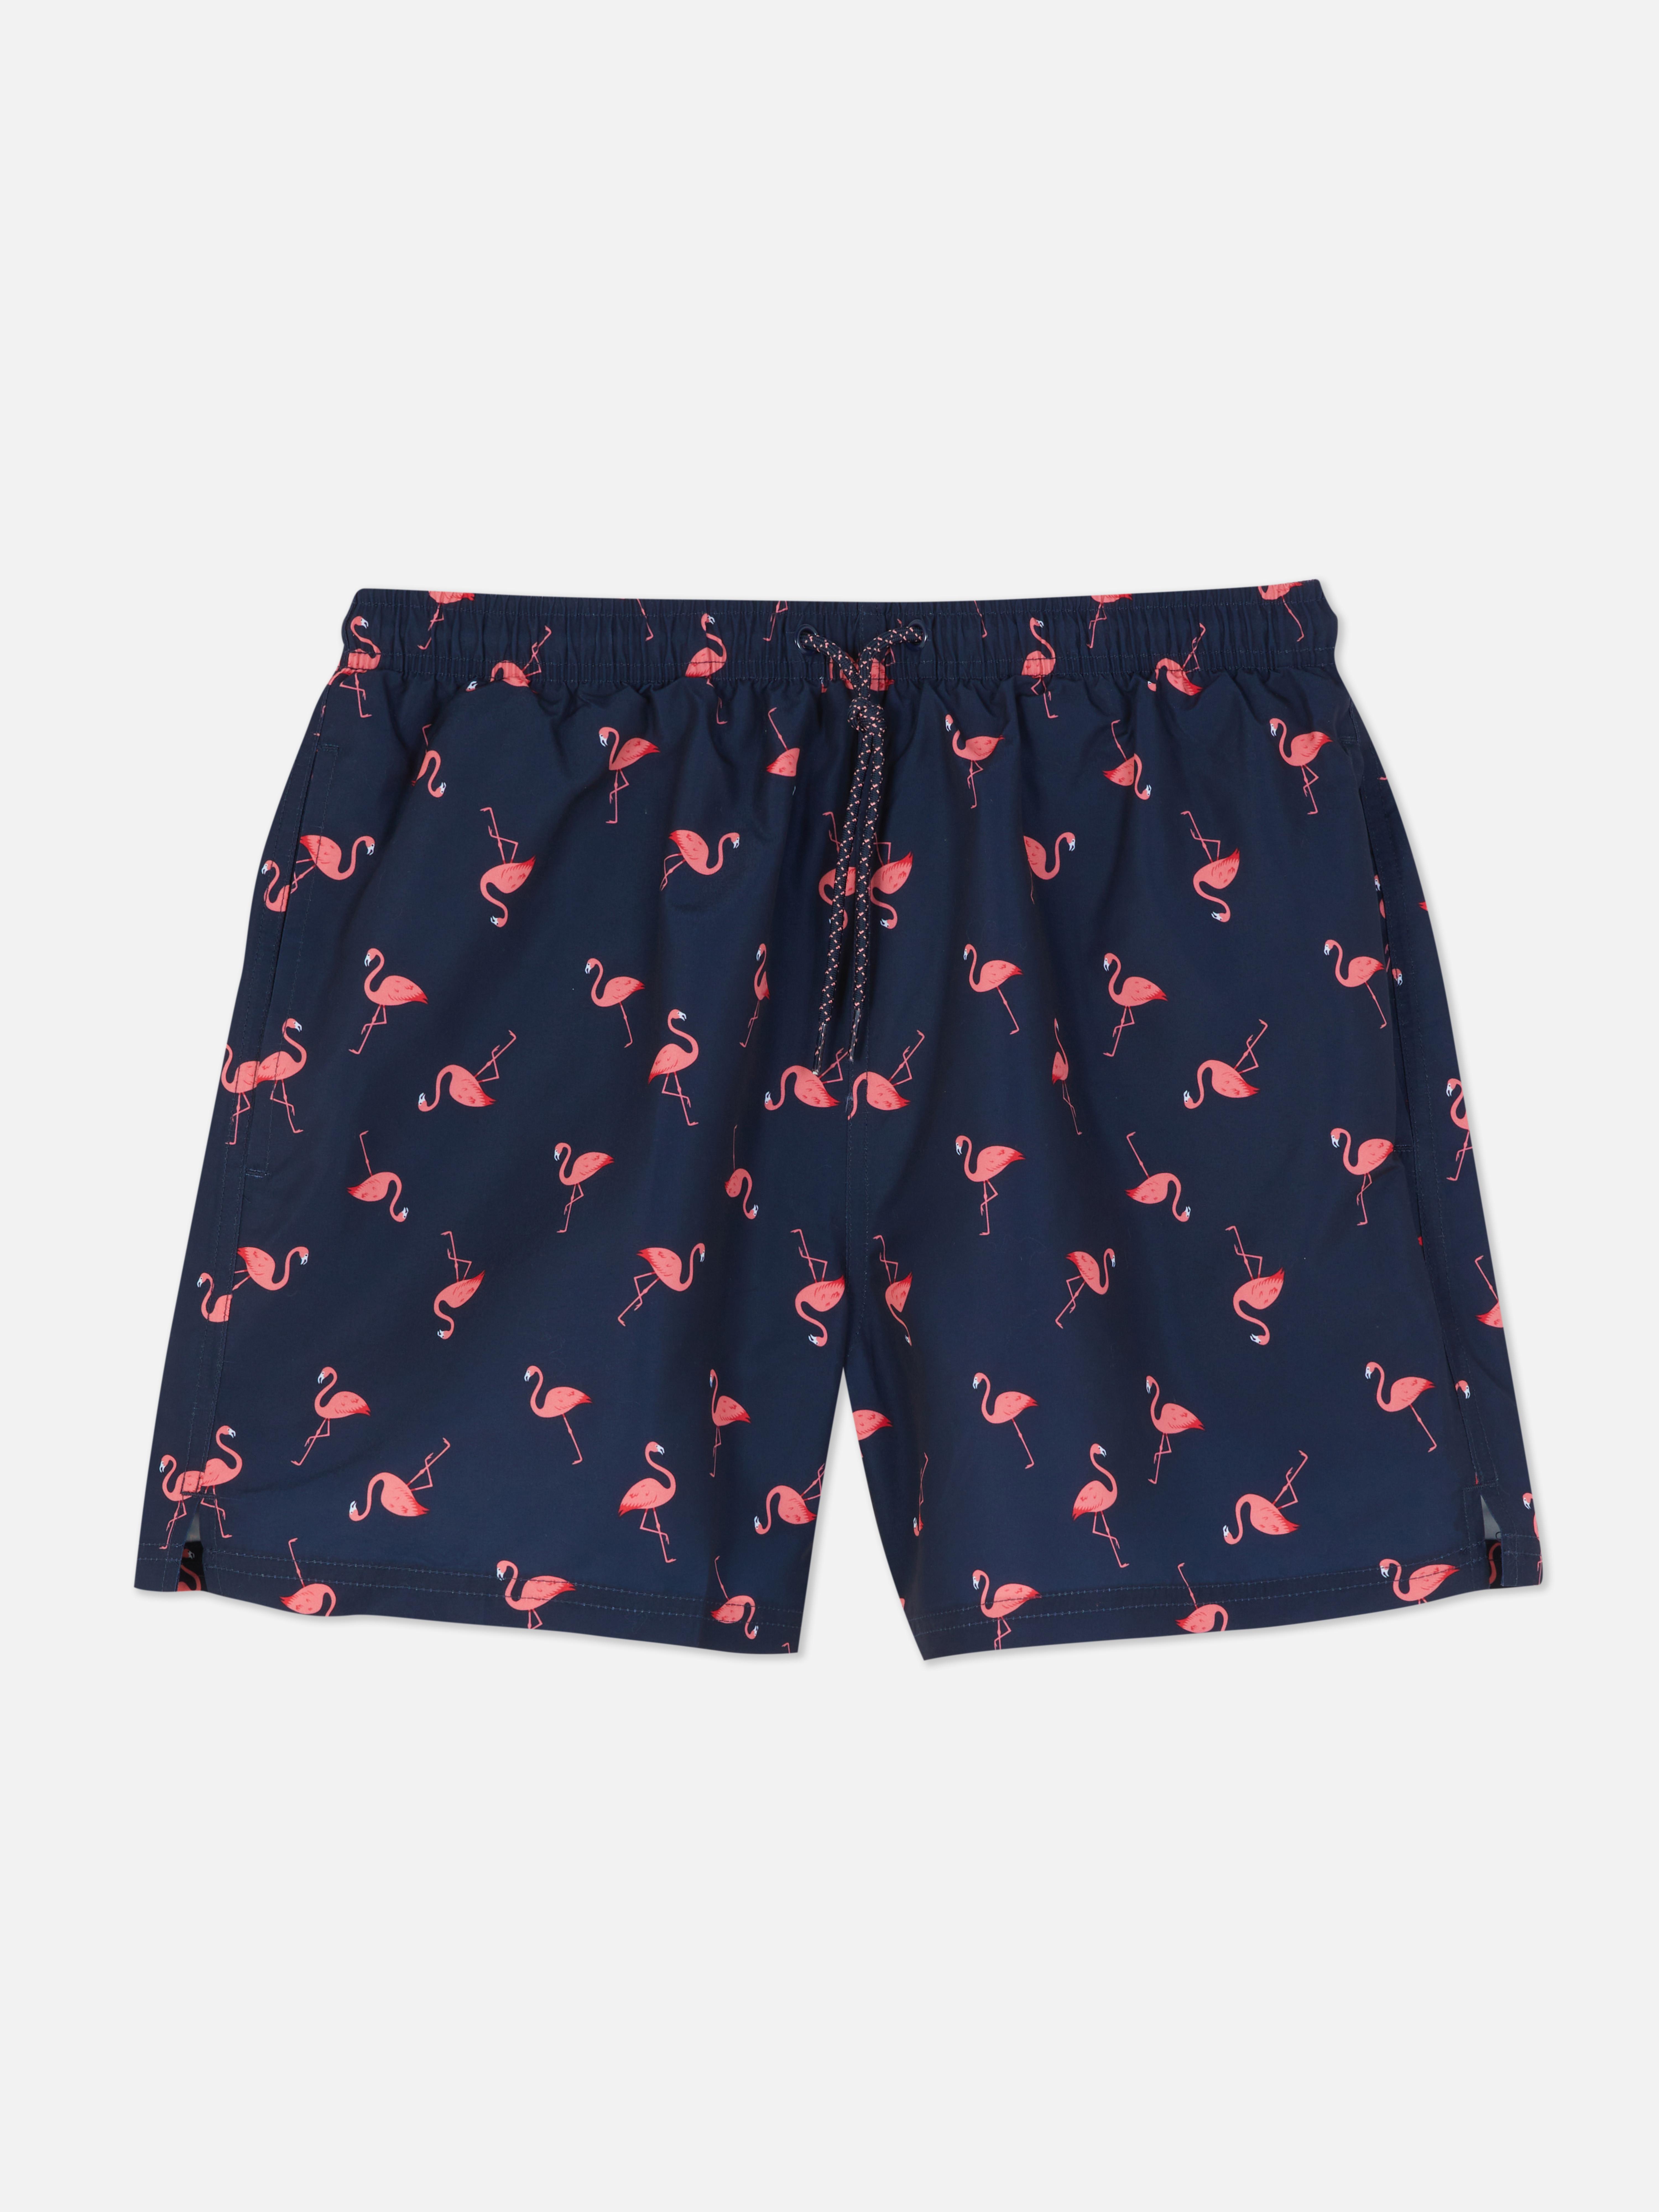 Flamingo Swim Shorts | Men's Swimwear | Men's Style | Our Menswear ...